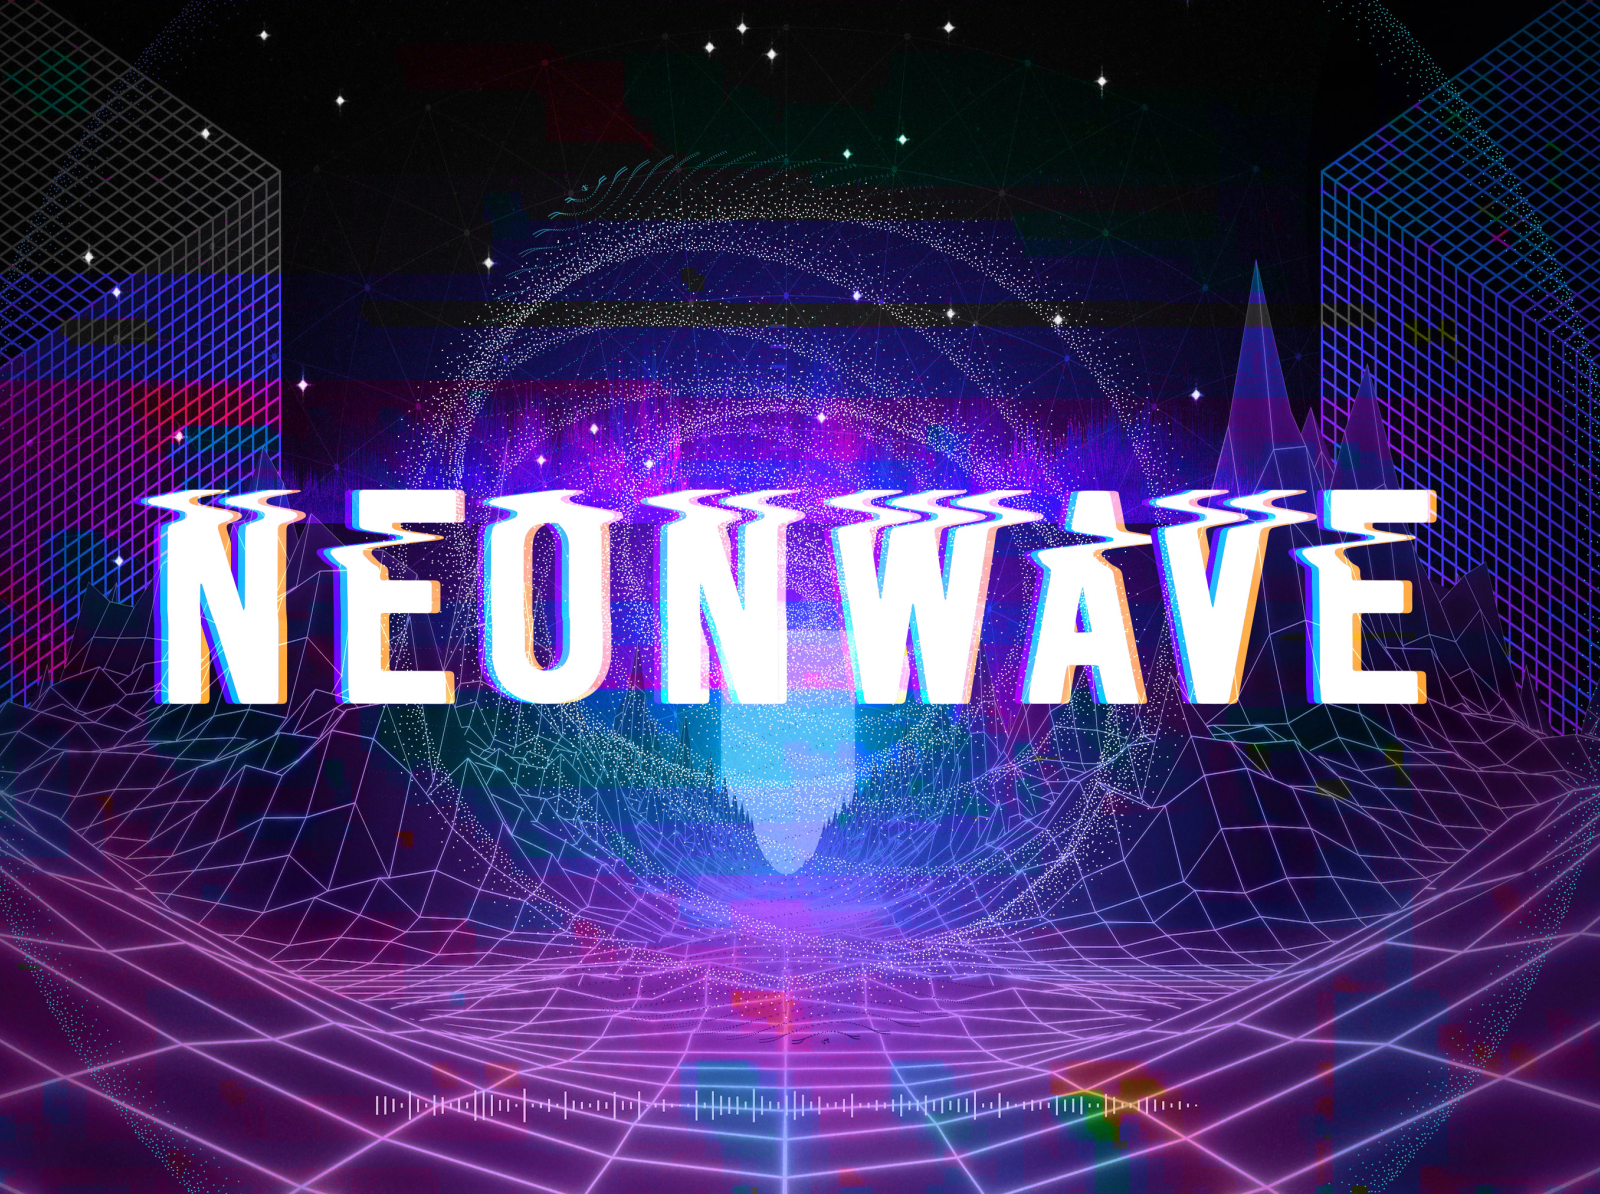 Neonwave Retro Future Landscape by Houston Hanna on Dribbble